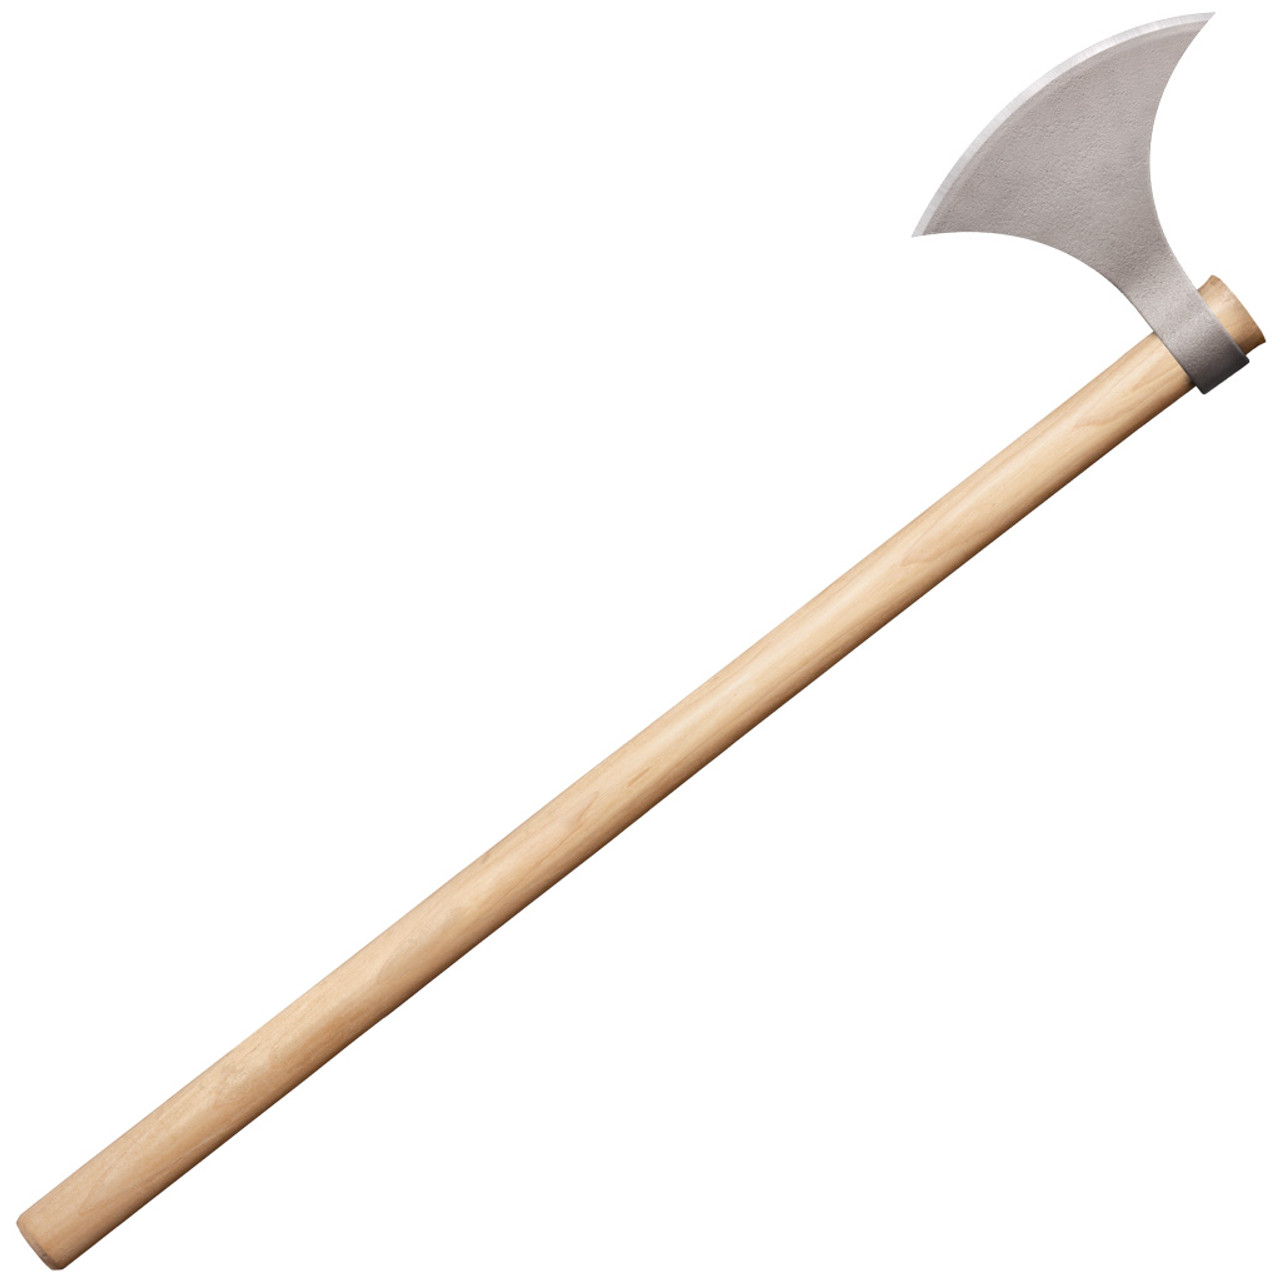 viking battle axes